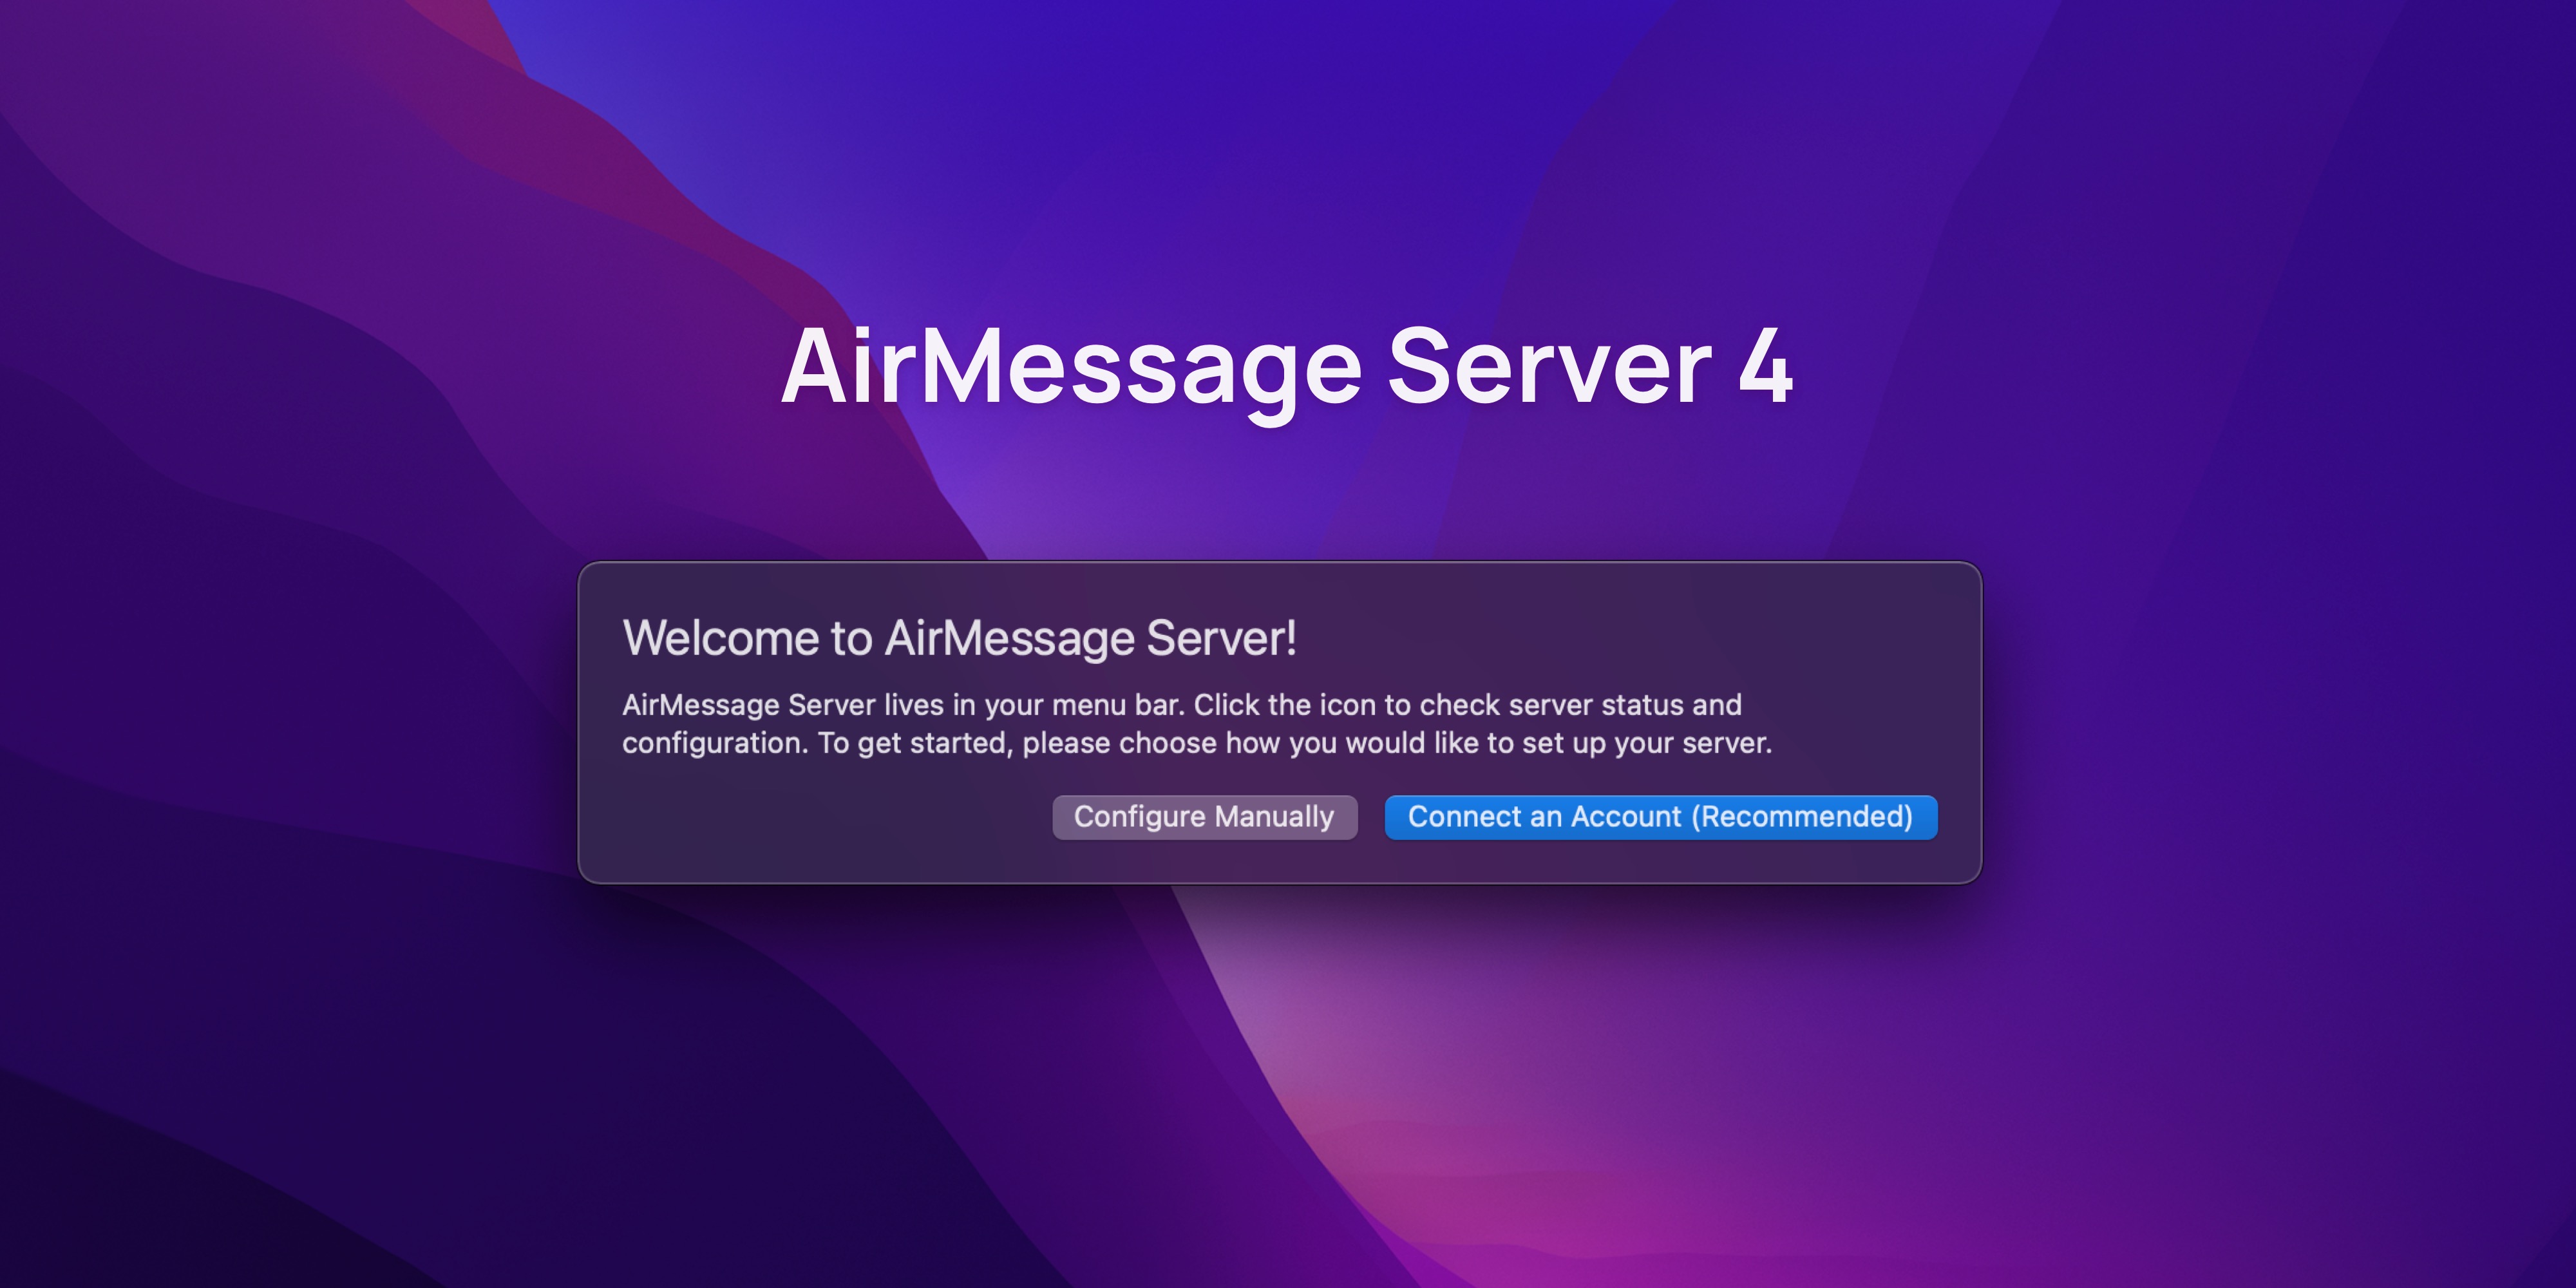 AirMessage Server 4 running on macOS 12